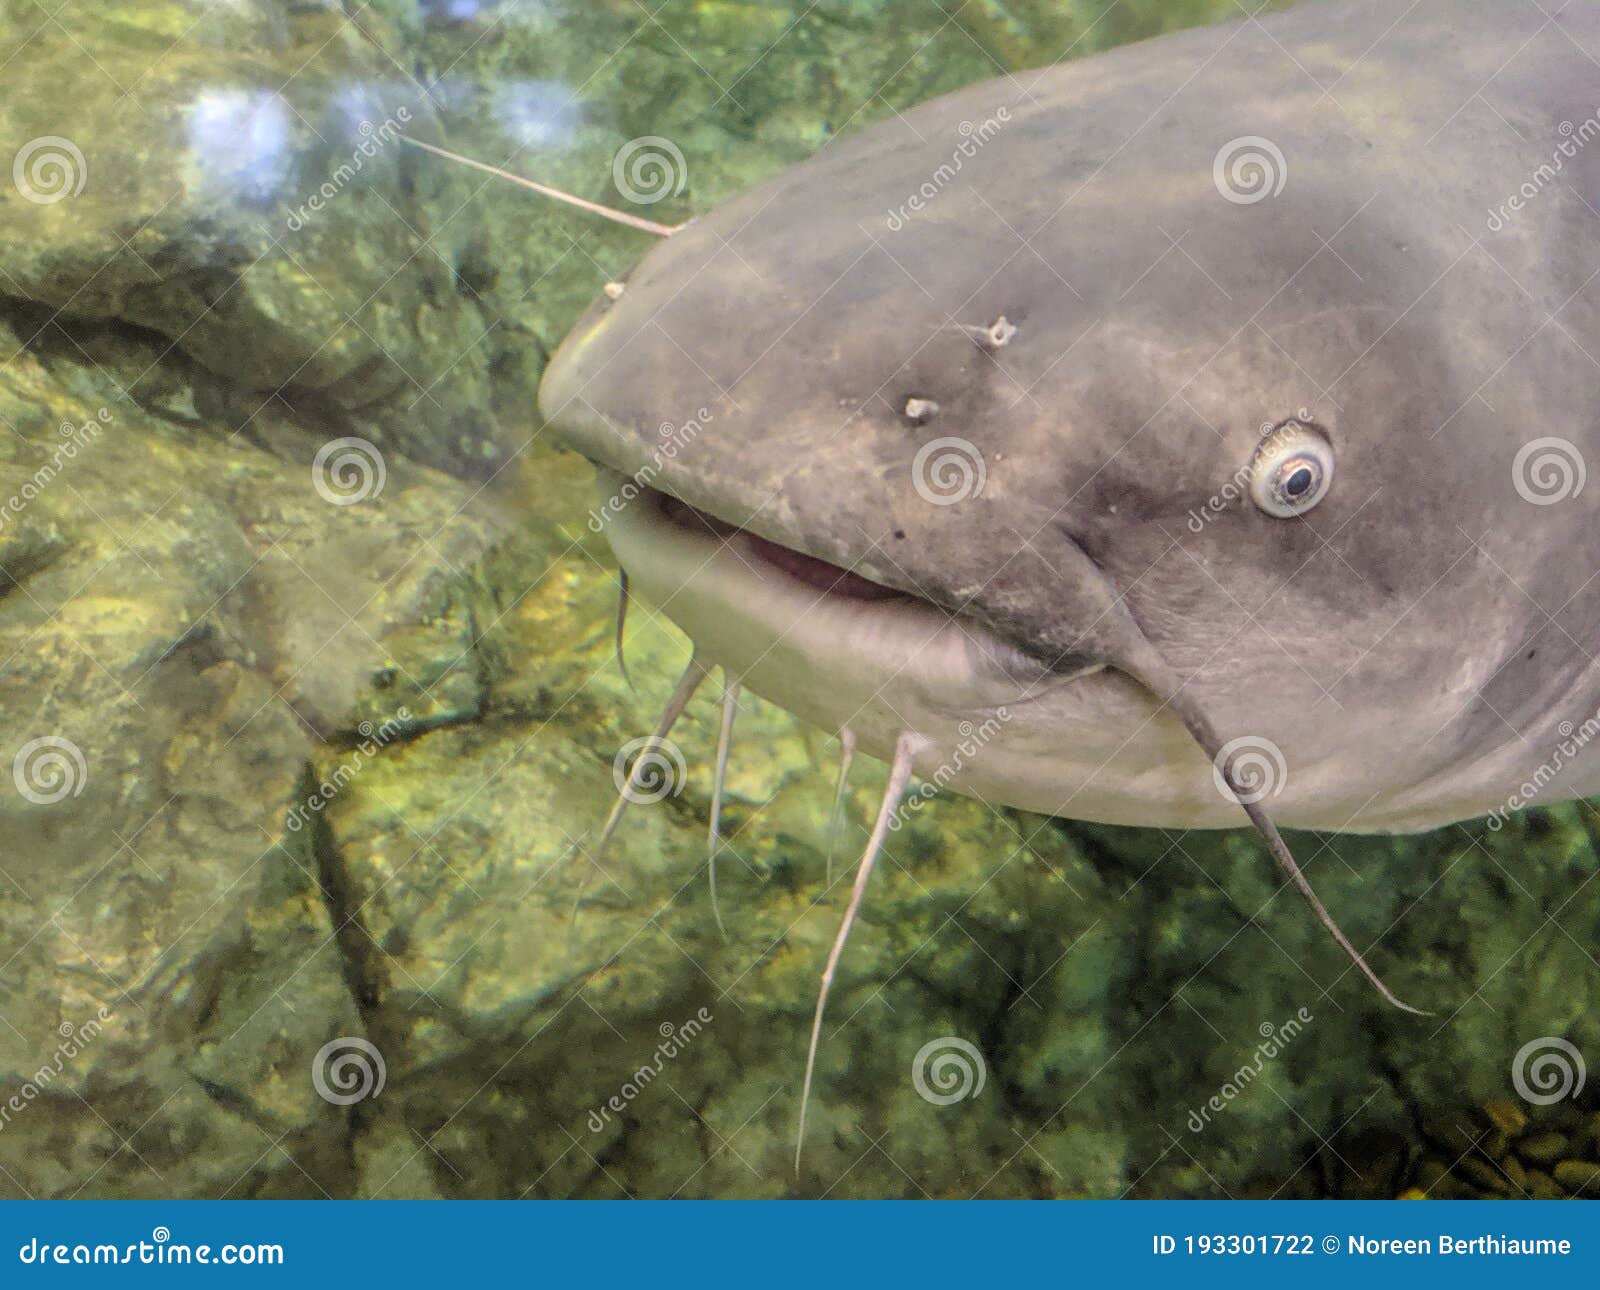 https://thumbs.dreamstime.com/z/catfish-big-eye-staring-whiskers-brown-grey-cat-fish-its-lips-rocks-background-193301722.jpg